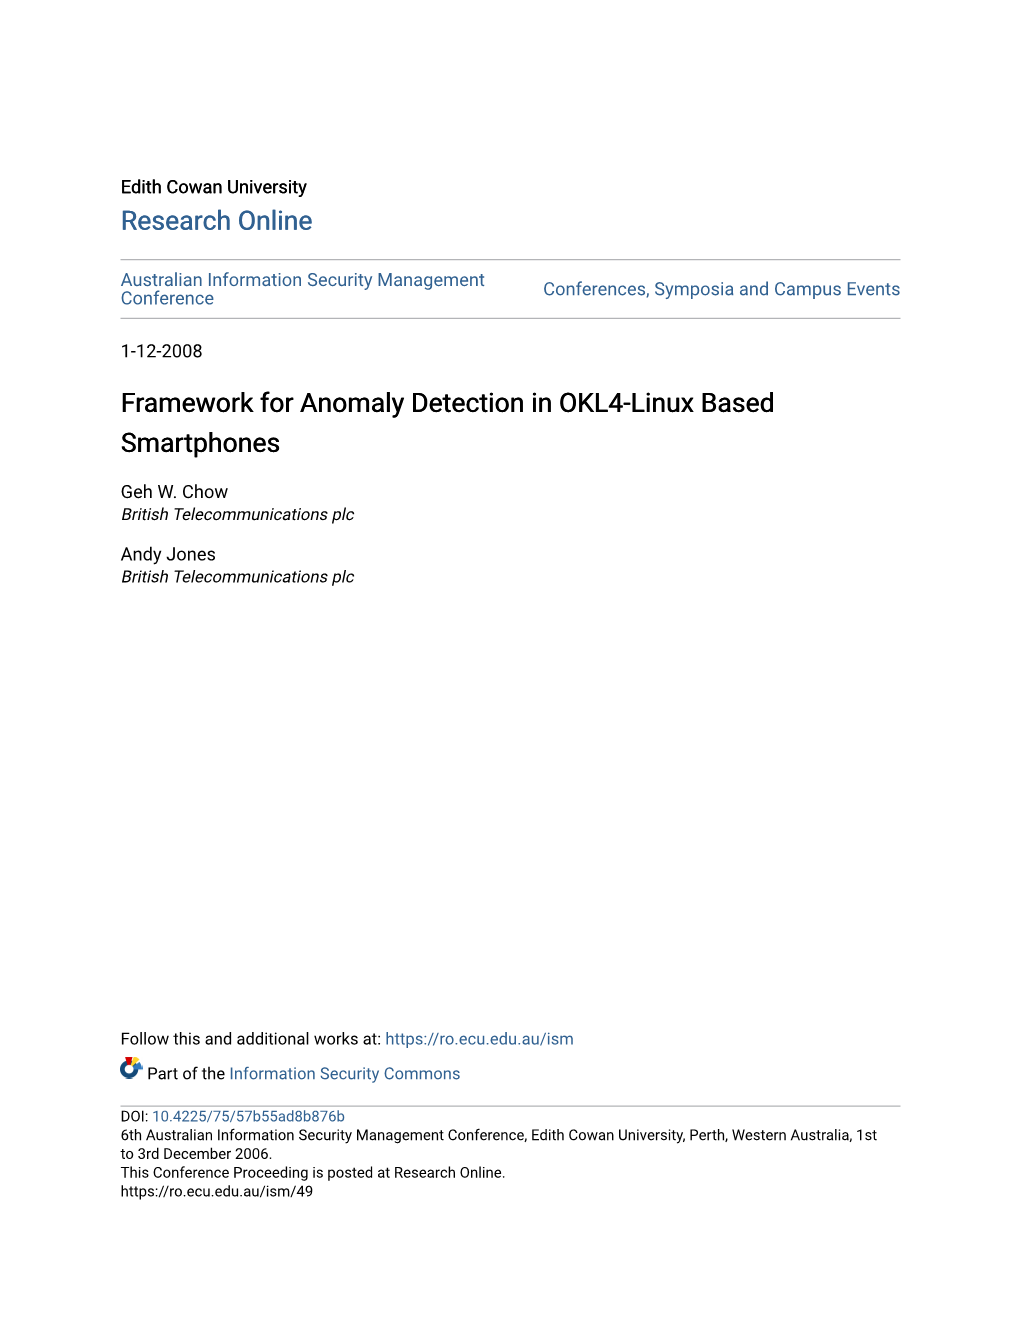 Framework for Anomaly Detection in OKL4-Linux Based Smartphones